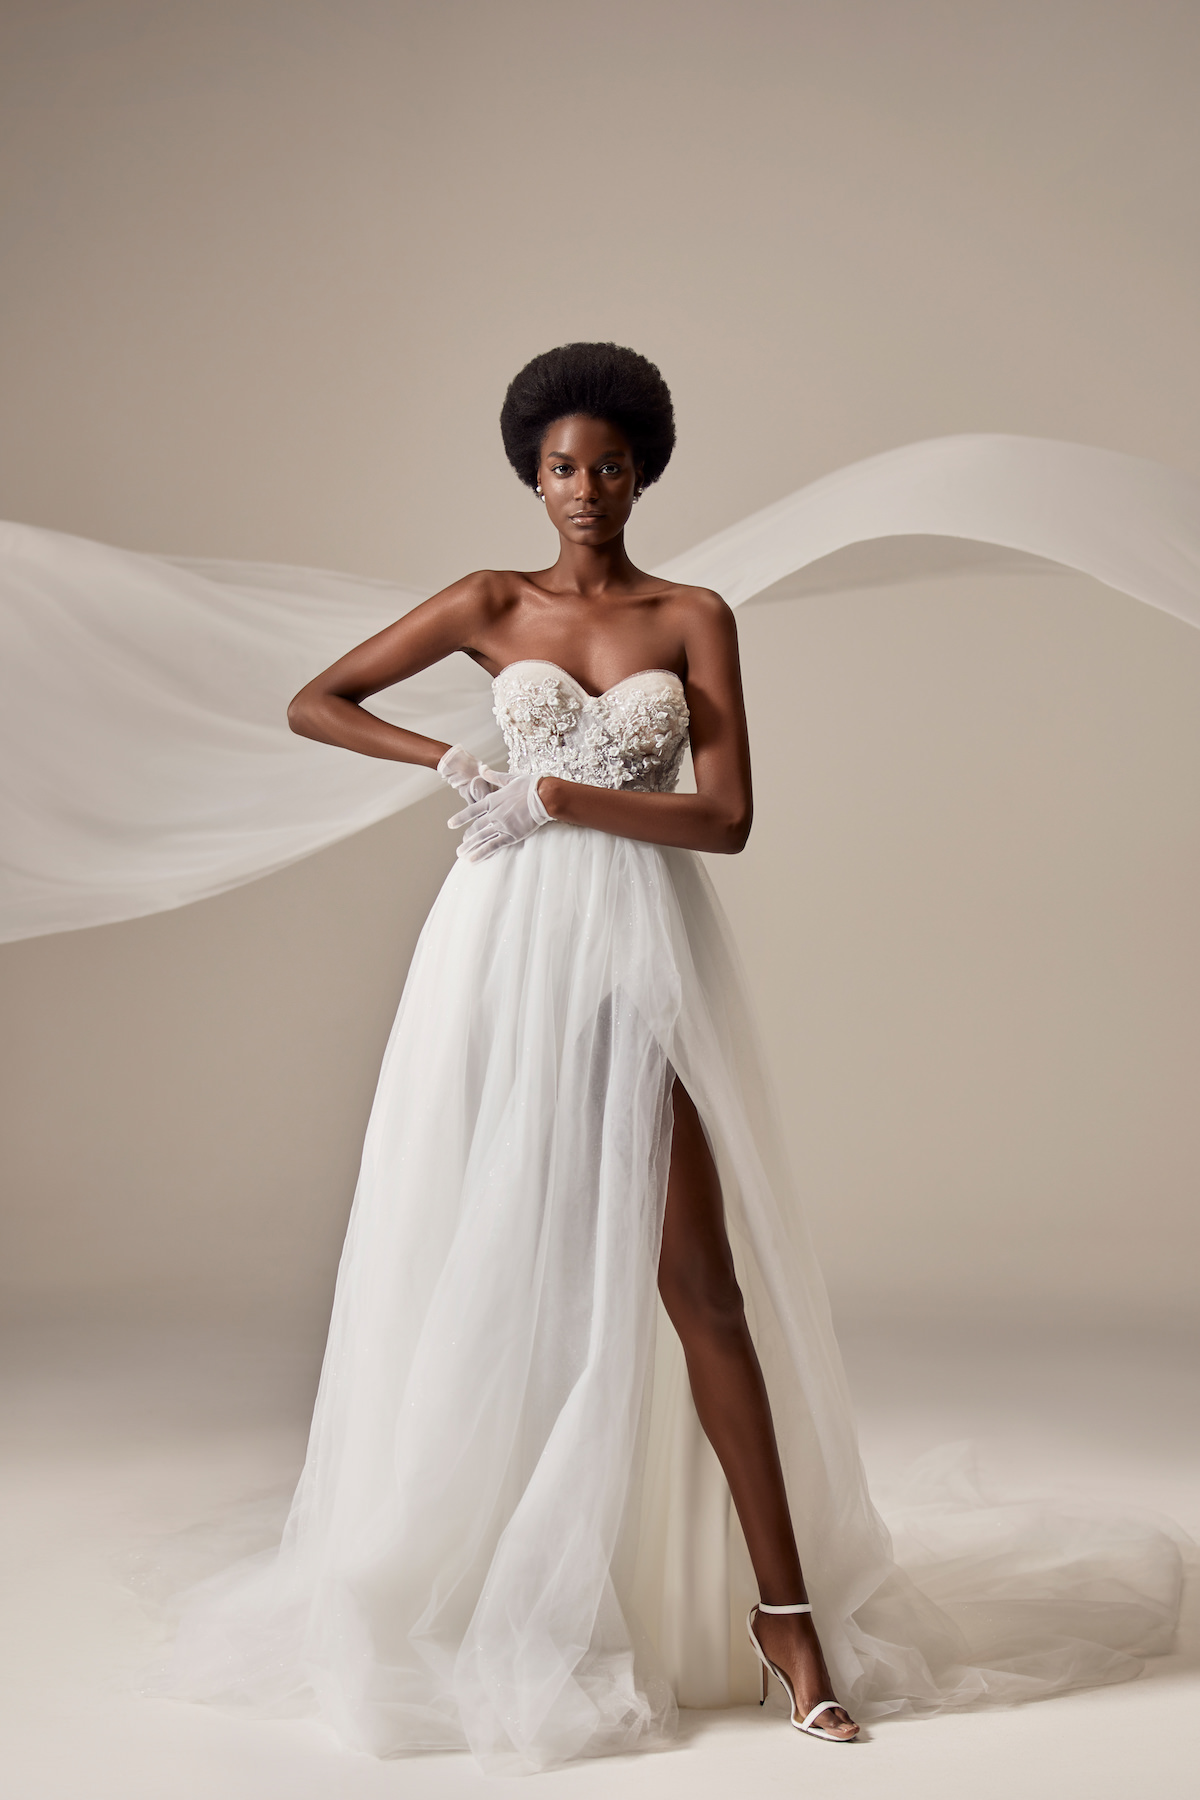 High slit Wedding Dress by Milla Nova - Charly white lace day